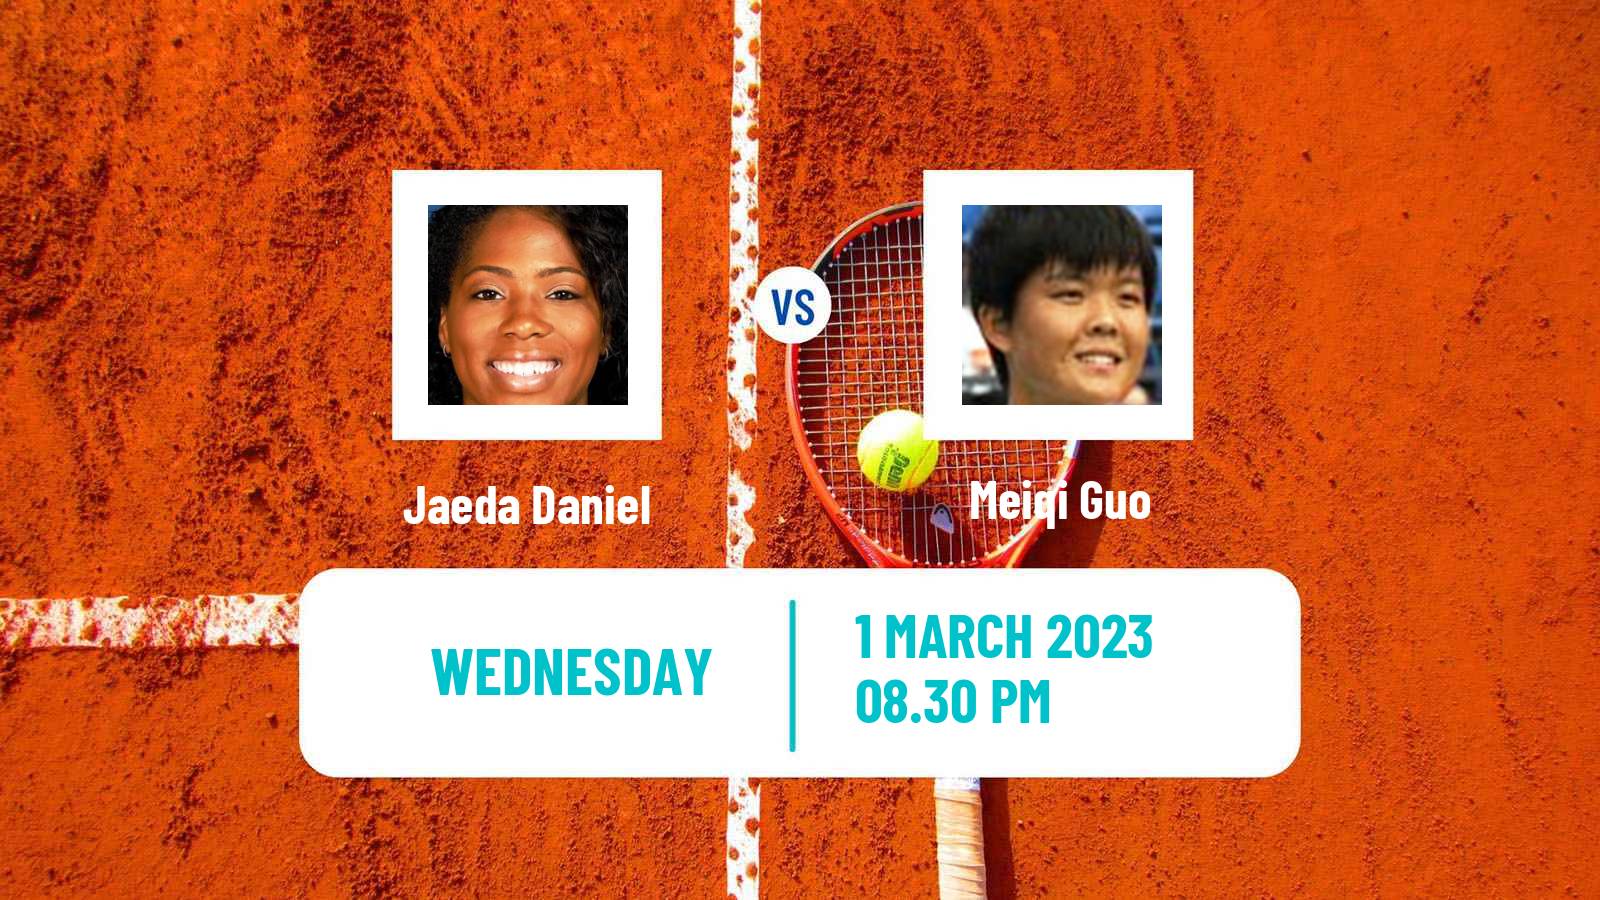 Tennis ITF Tournaments Jaeda Daniel - Meiqi Guo